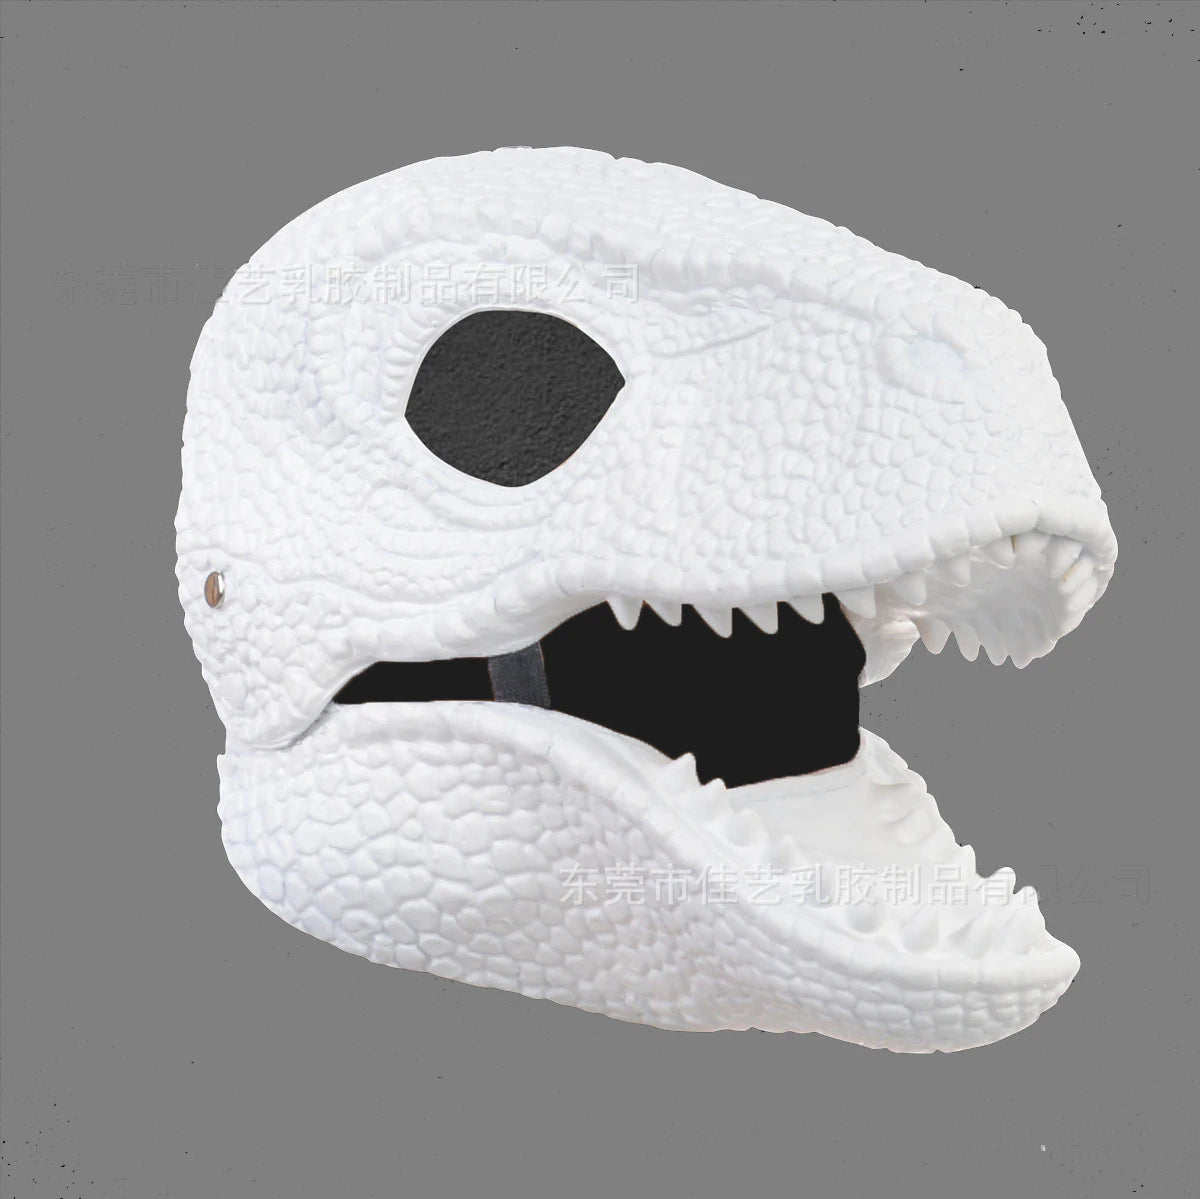 Halloween Party Horror Dinosaur Headgear Mask